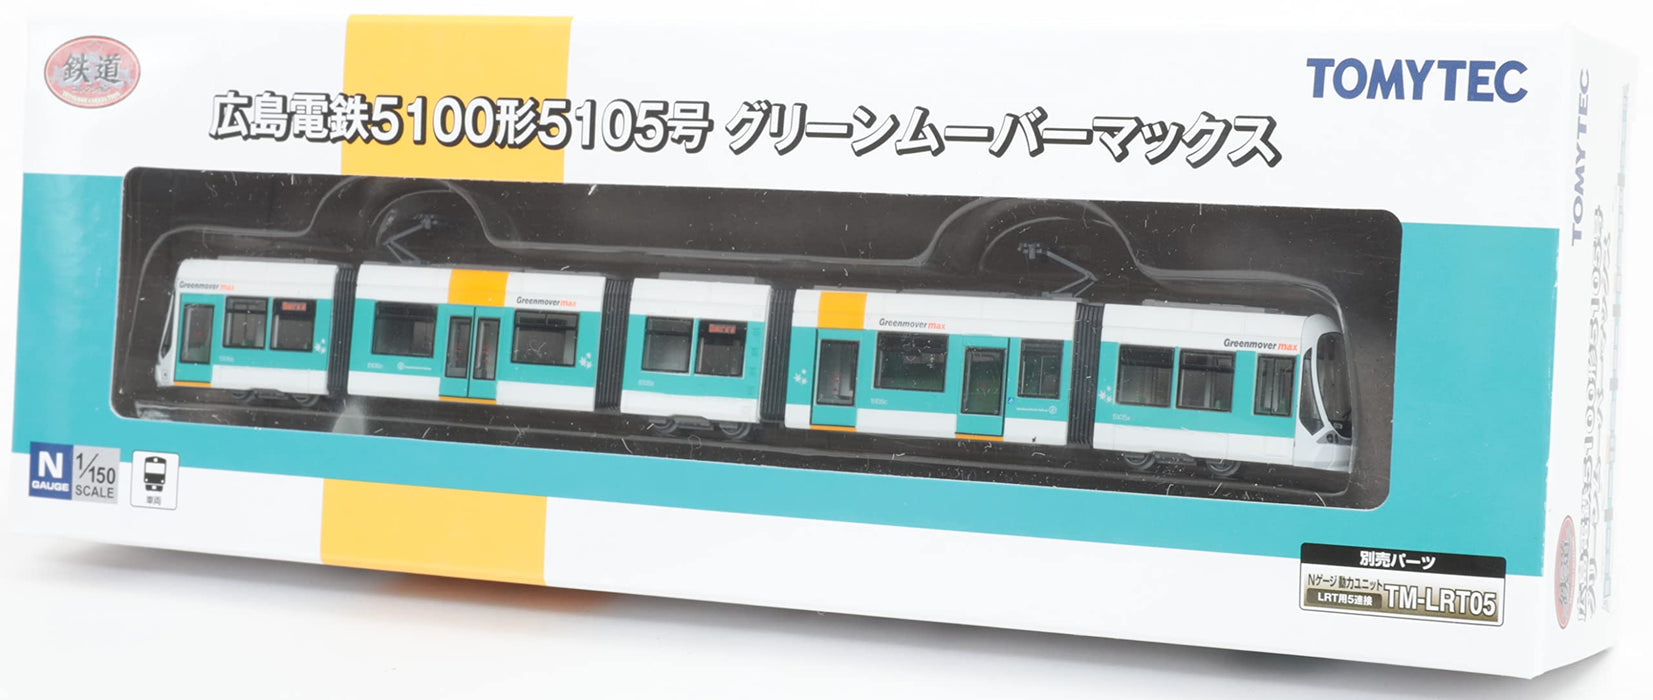 Tomytec 5100 n° 5105 Green Mover Max Hiroshima Railway Diorama Modèle 316589